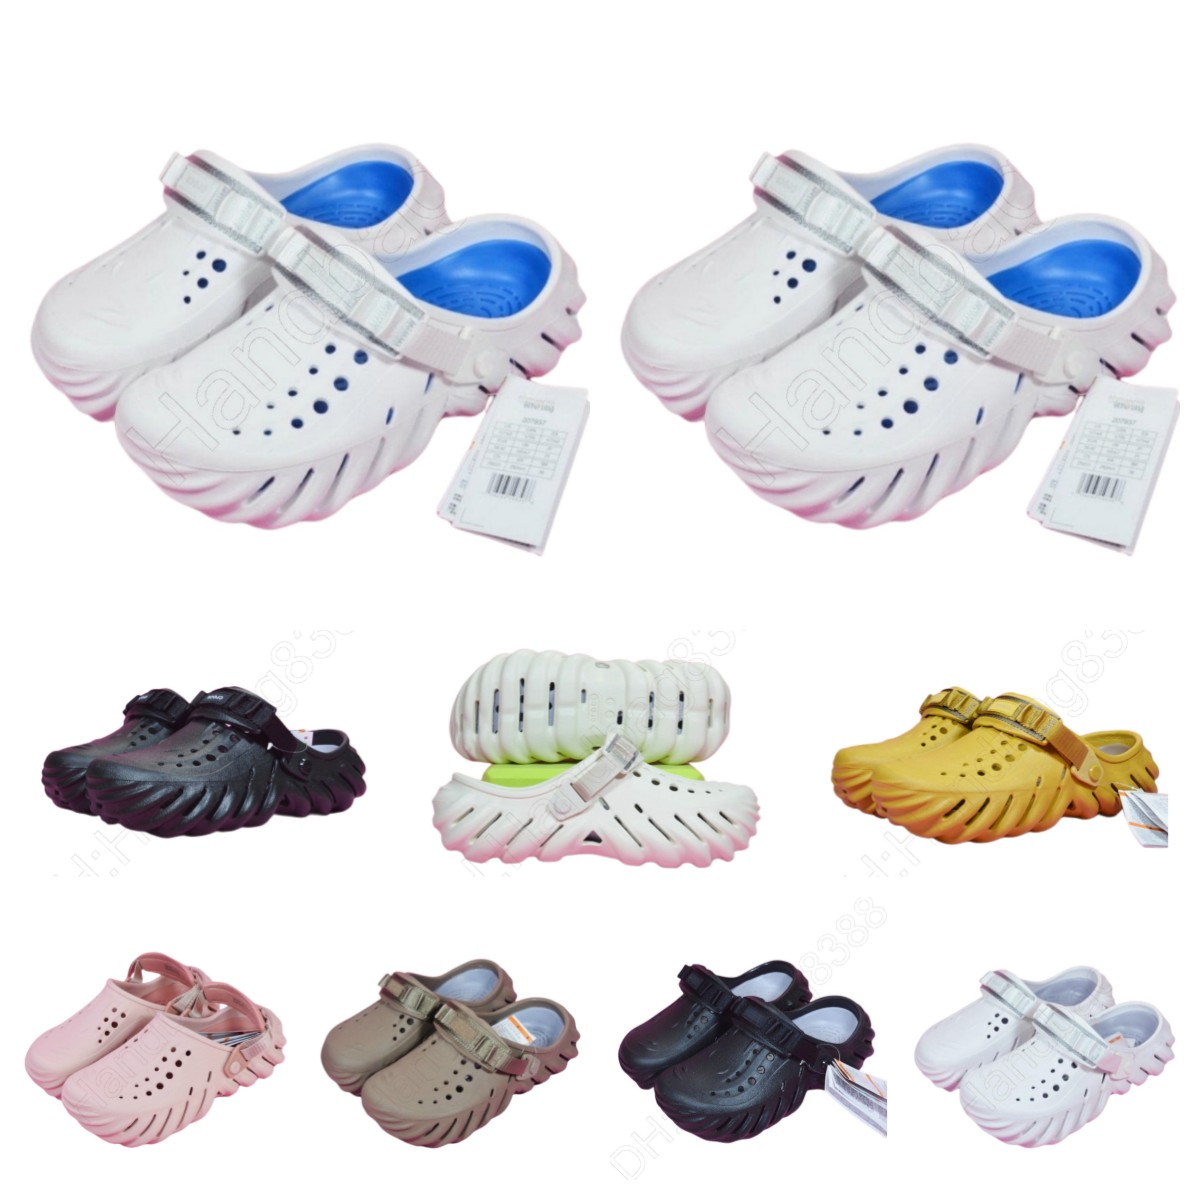 

Sandals EVA Bobo echoclog CrocClog Crocodile Shoes Lightweight comfortable Women Men Summer Slides Designers Sandalias Slippers A11, Dark blue -blue